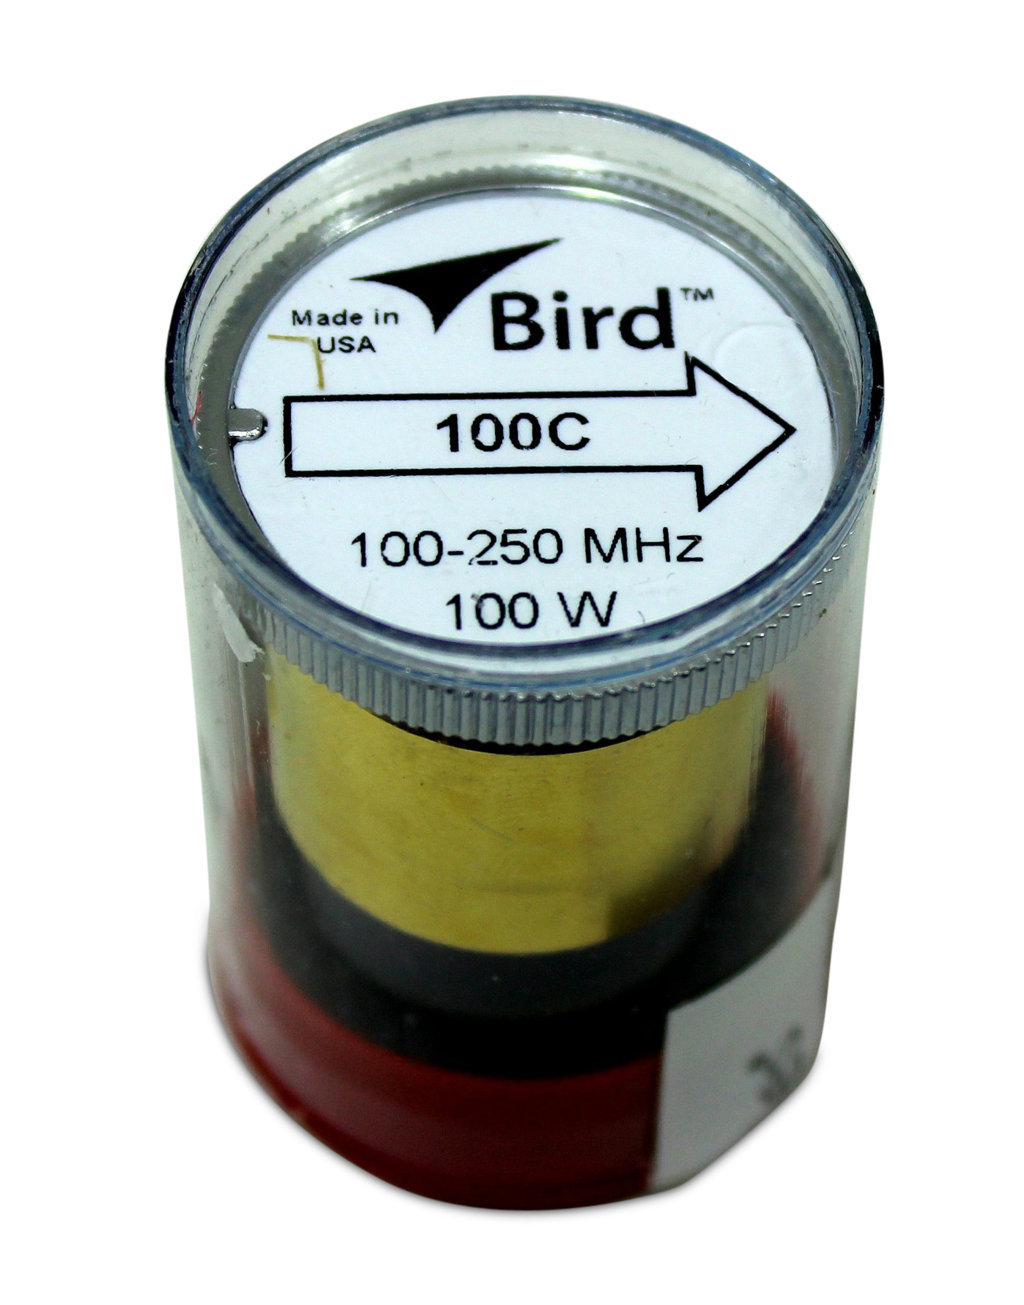 Bird Electronic - Bird Element 100C 100W 100-250 MHz #BRD-100C